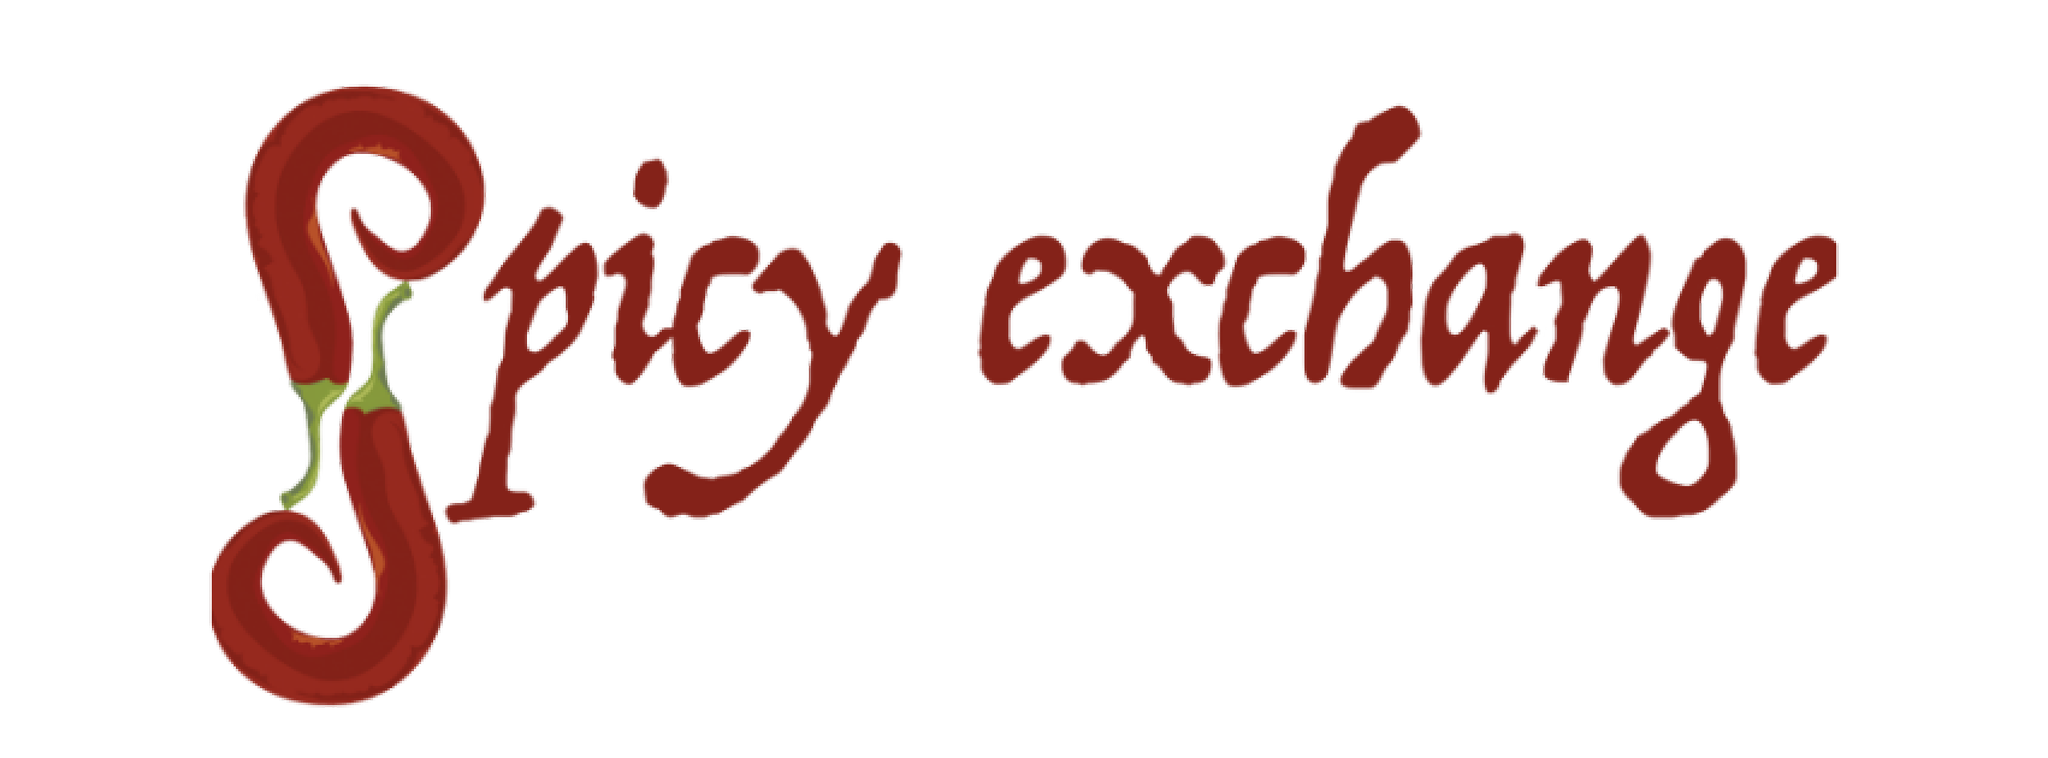 spicy exchange logo